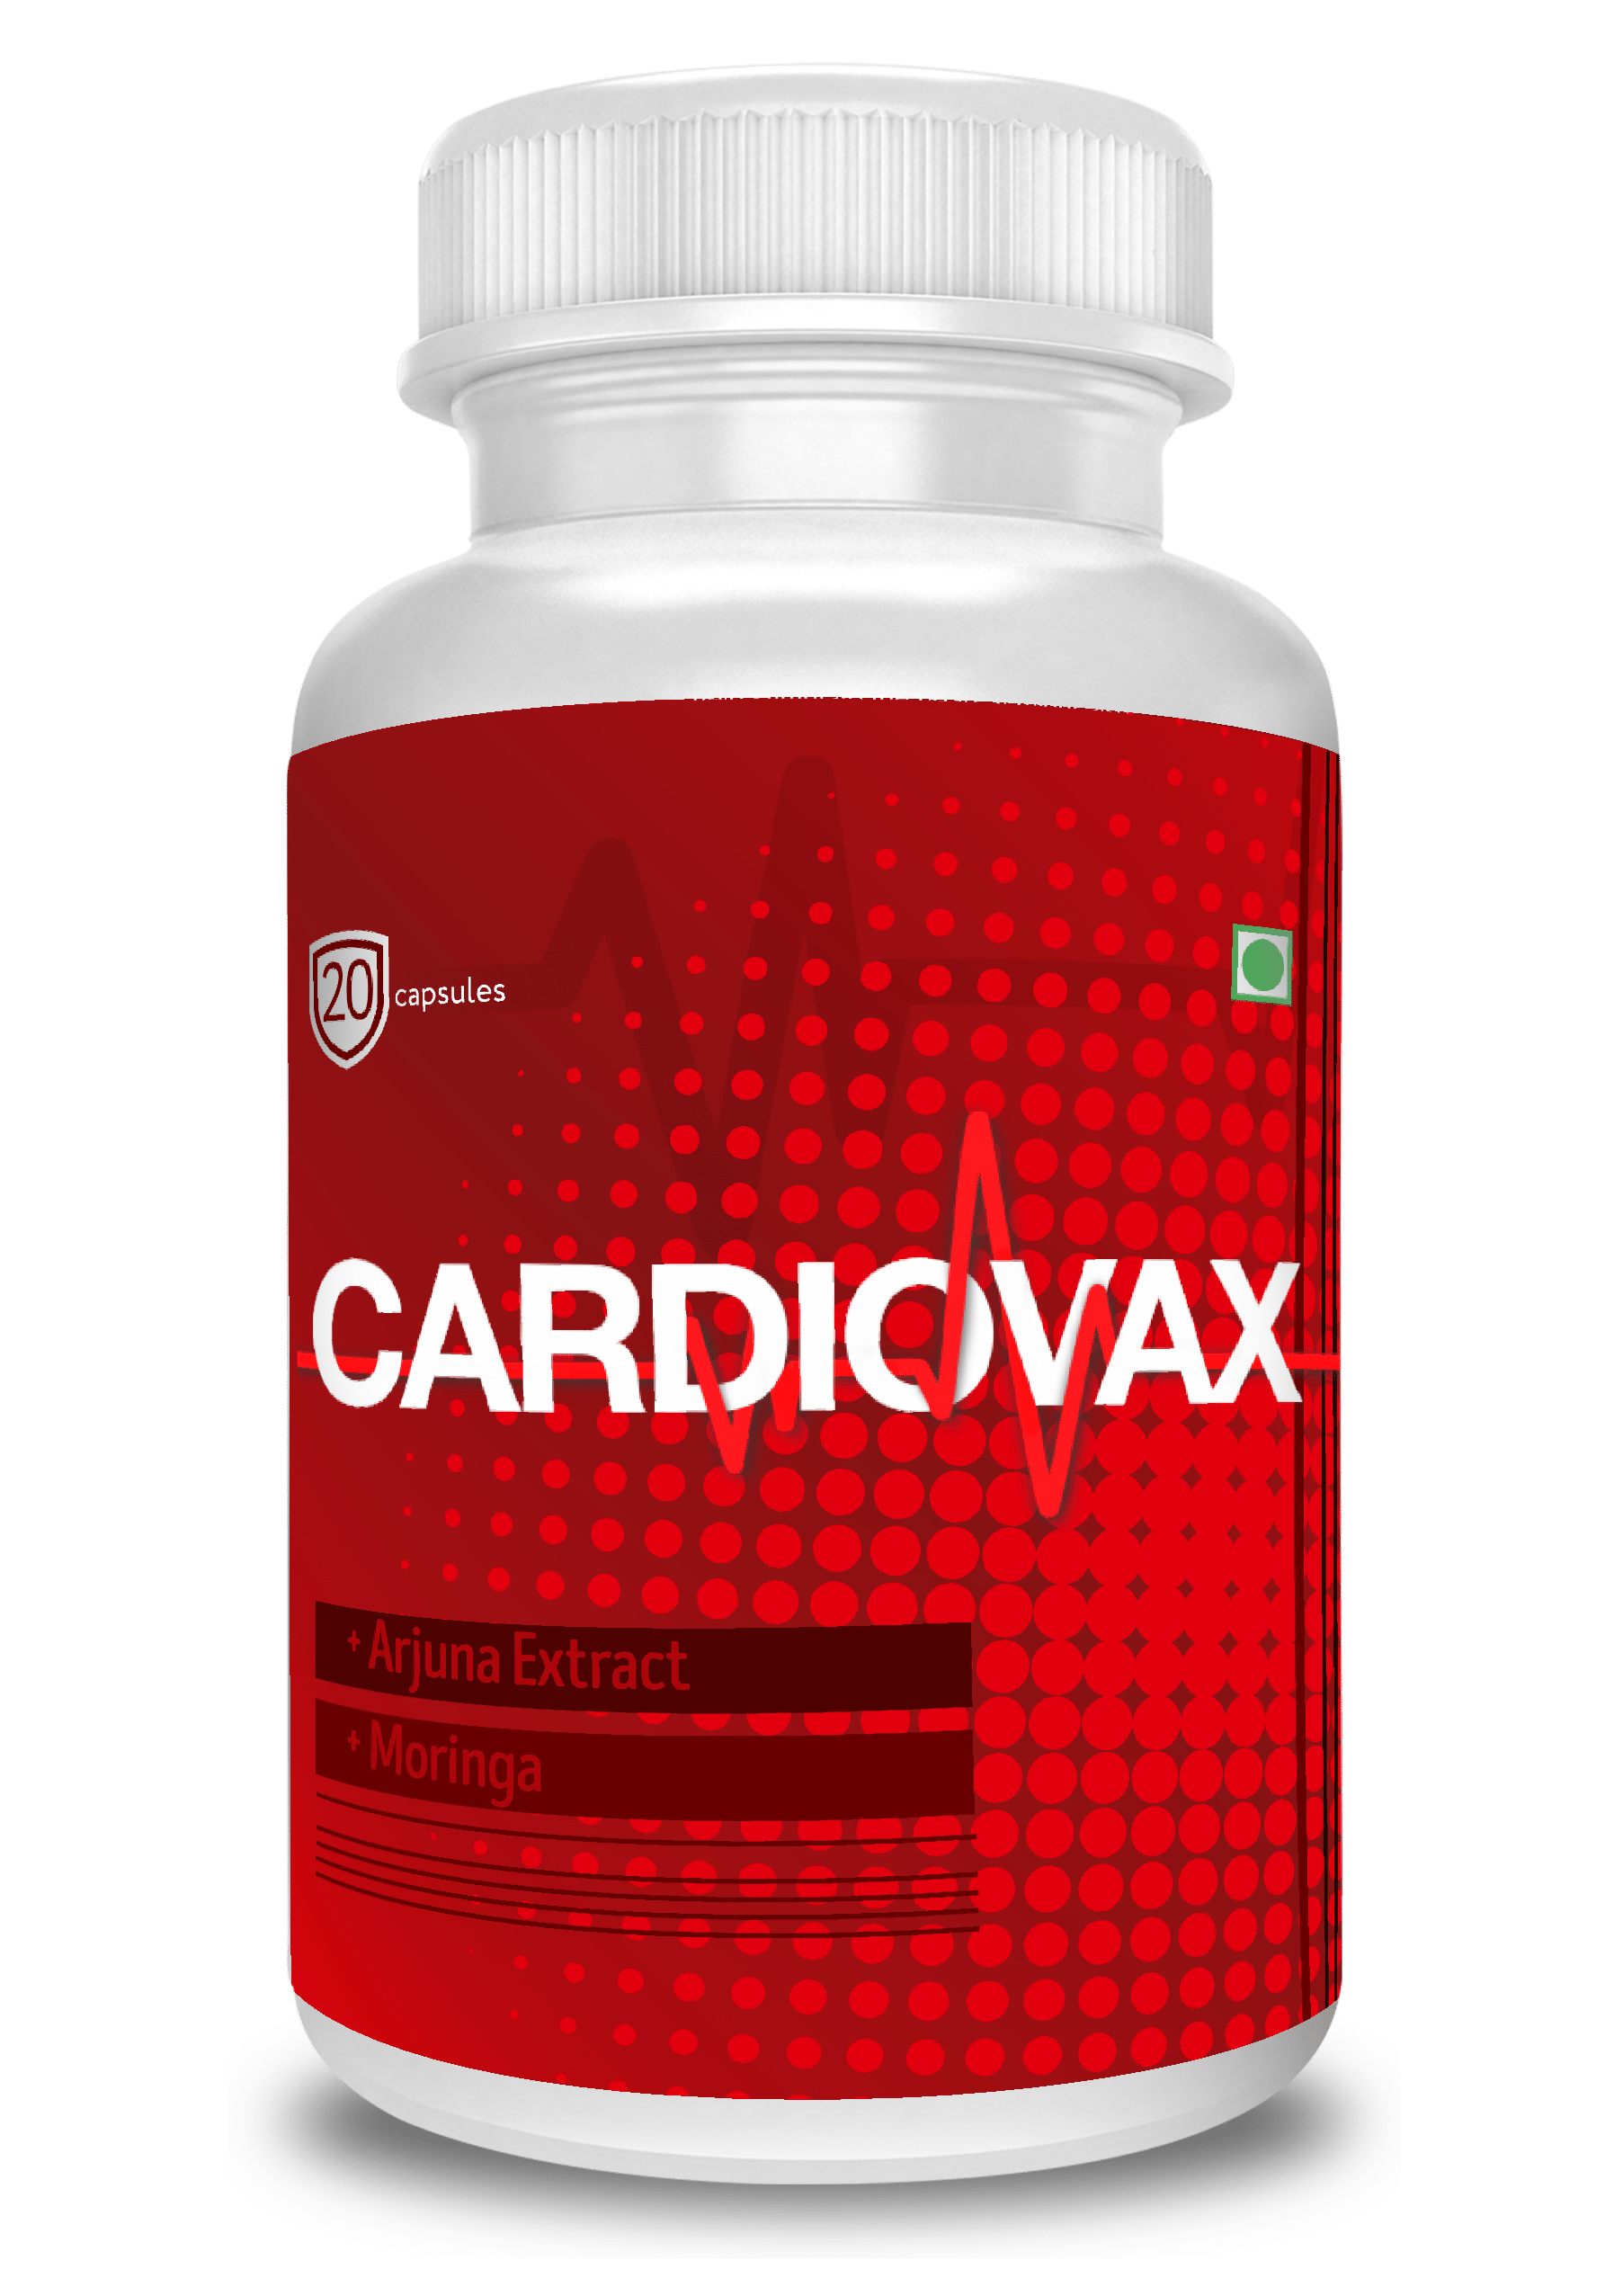 Cardiovax Customer Reviews